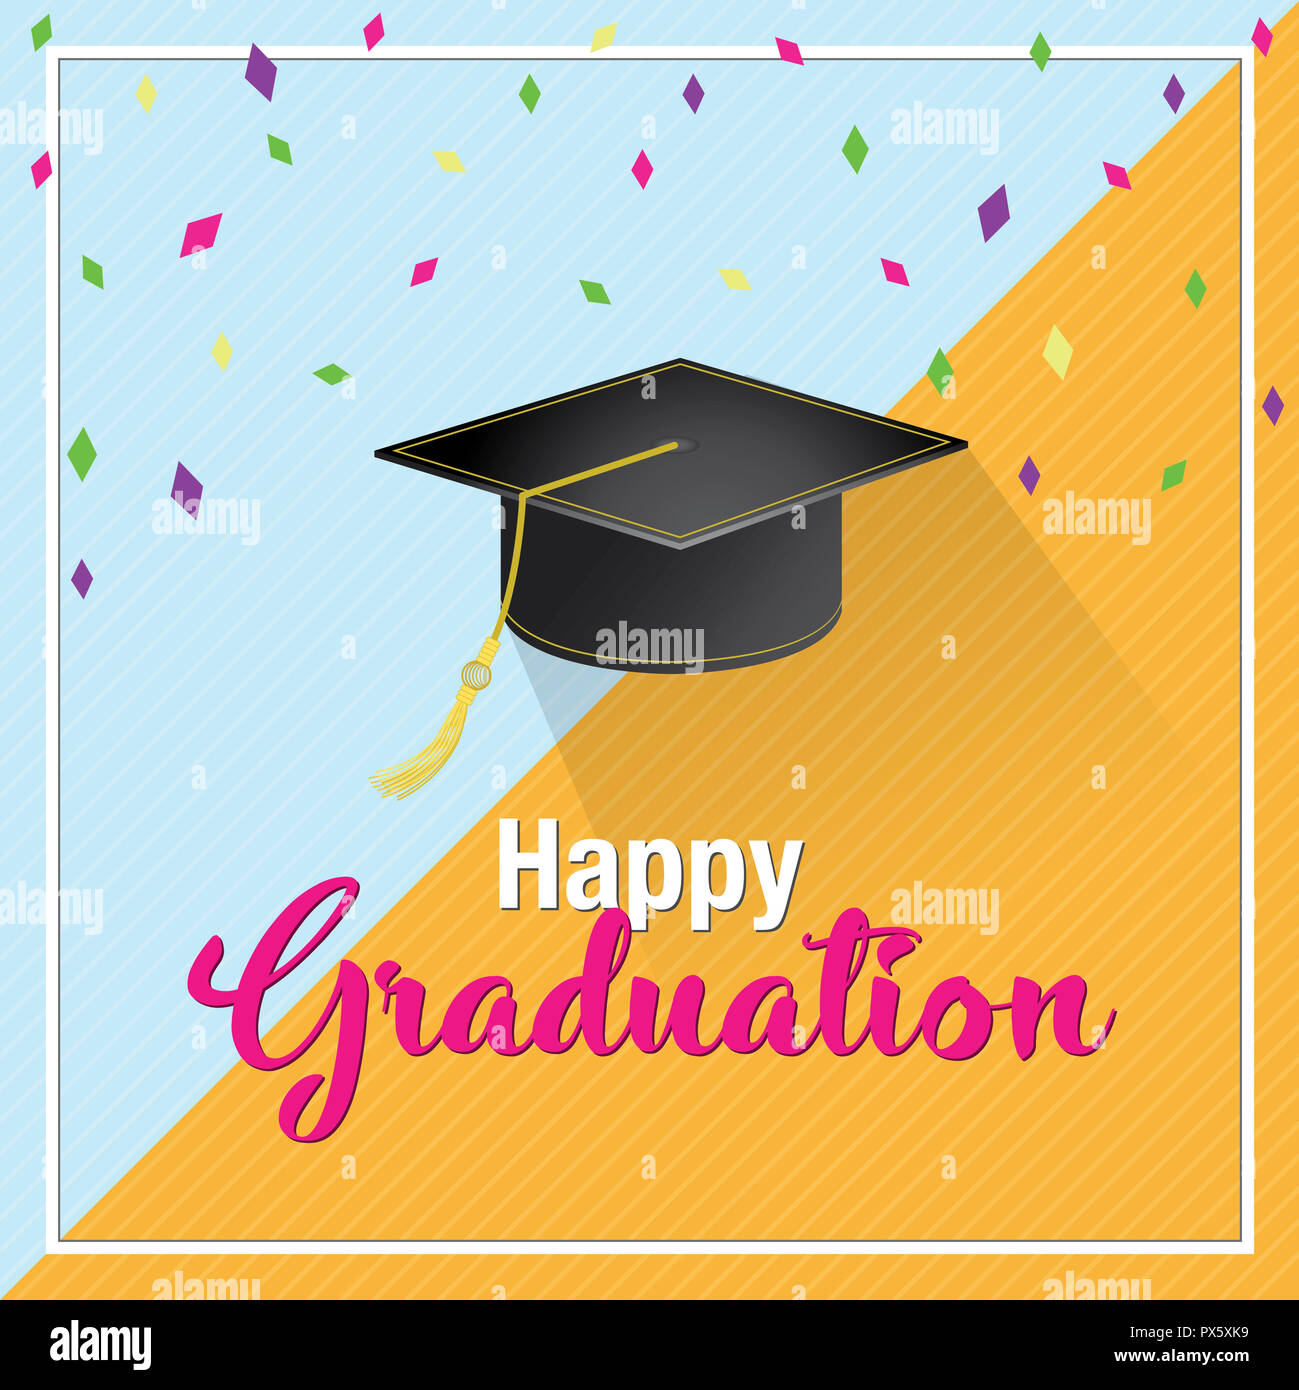 Happy Graduation Day Colourful Background Stock Photo - Alamy